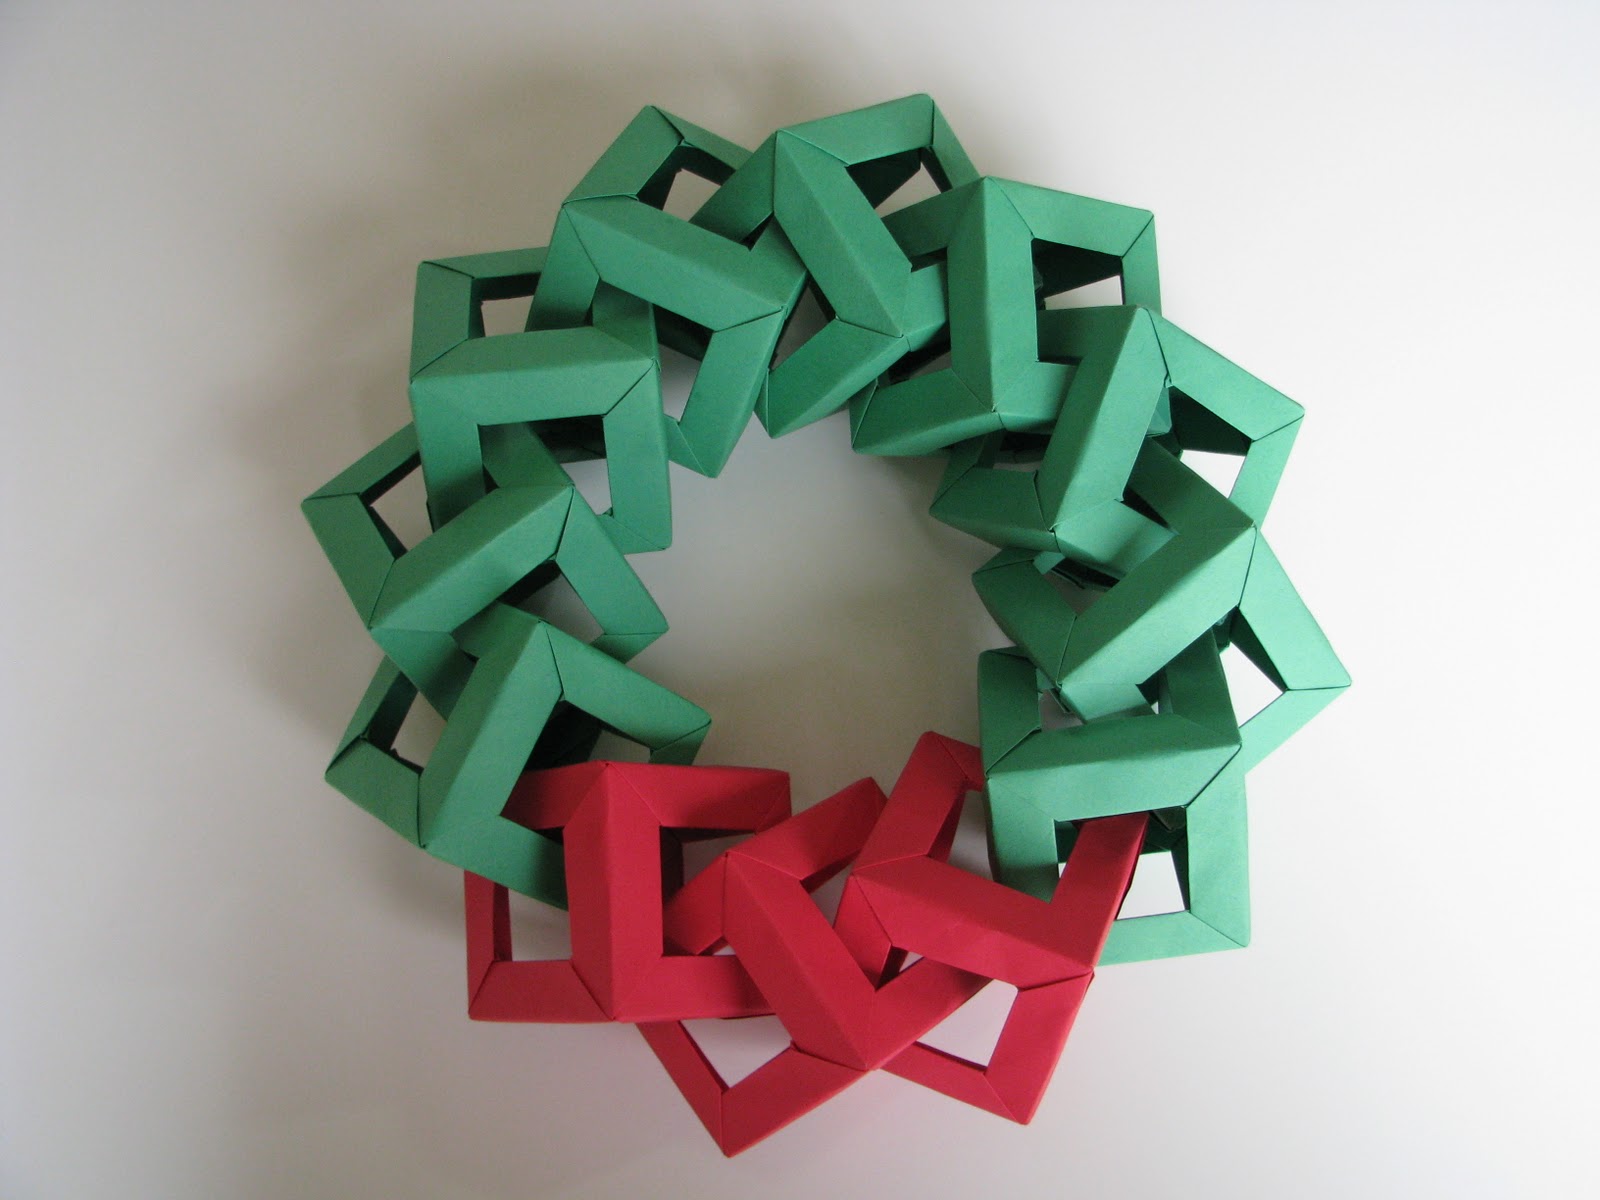 Stephen's Origami: Origami Christmas Decorations - Origami Wreath